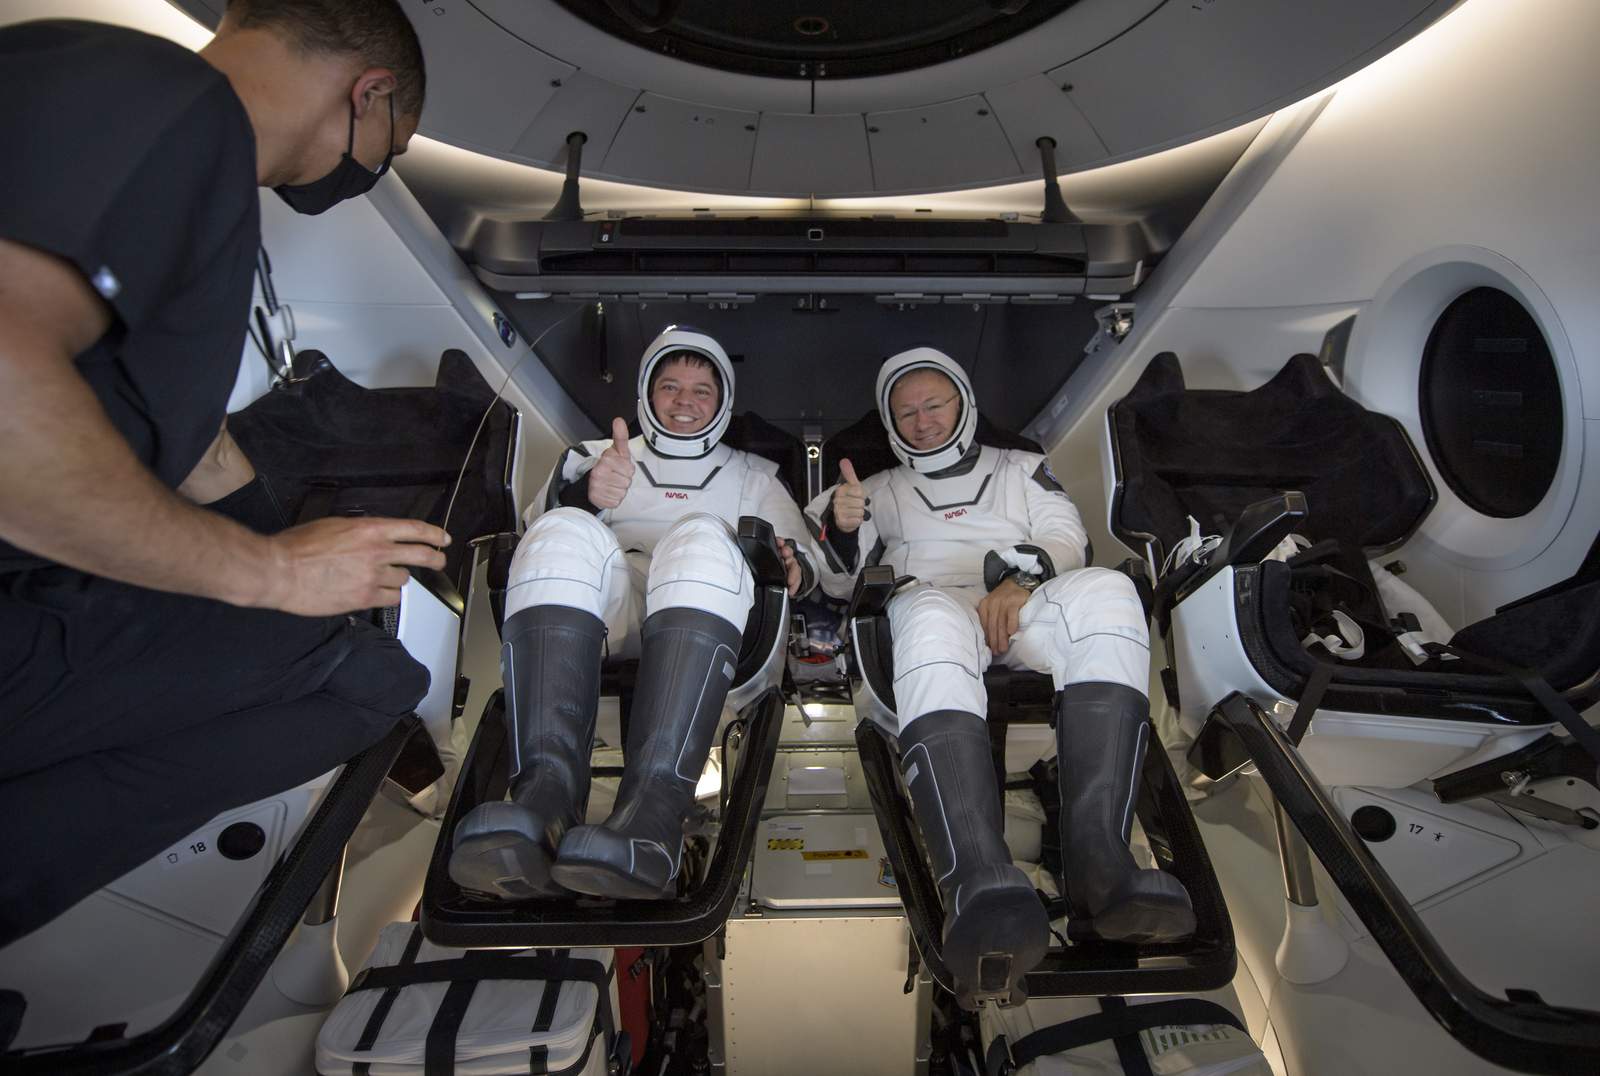 Welcome back to Earth, NASA astronauts splashdown in SpaceX Dragon capsule off Florida coast